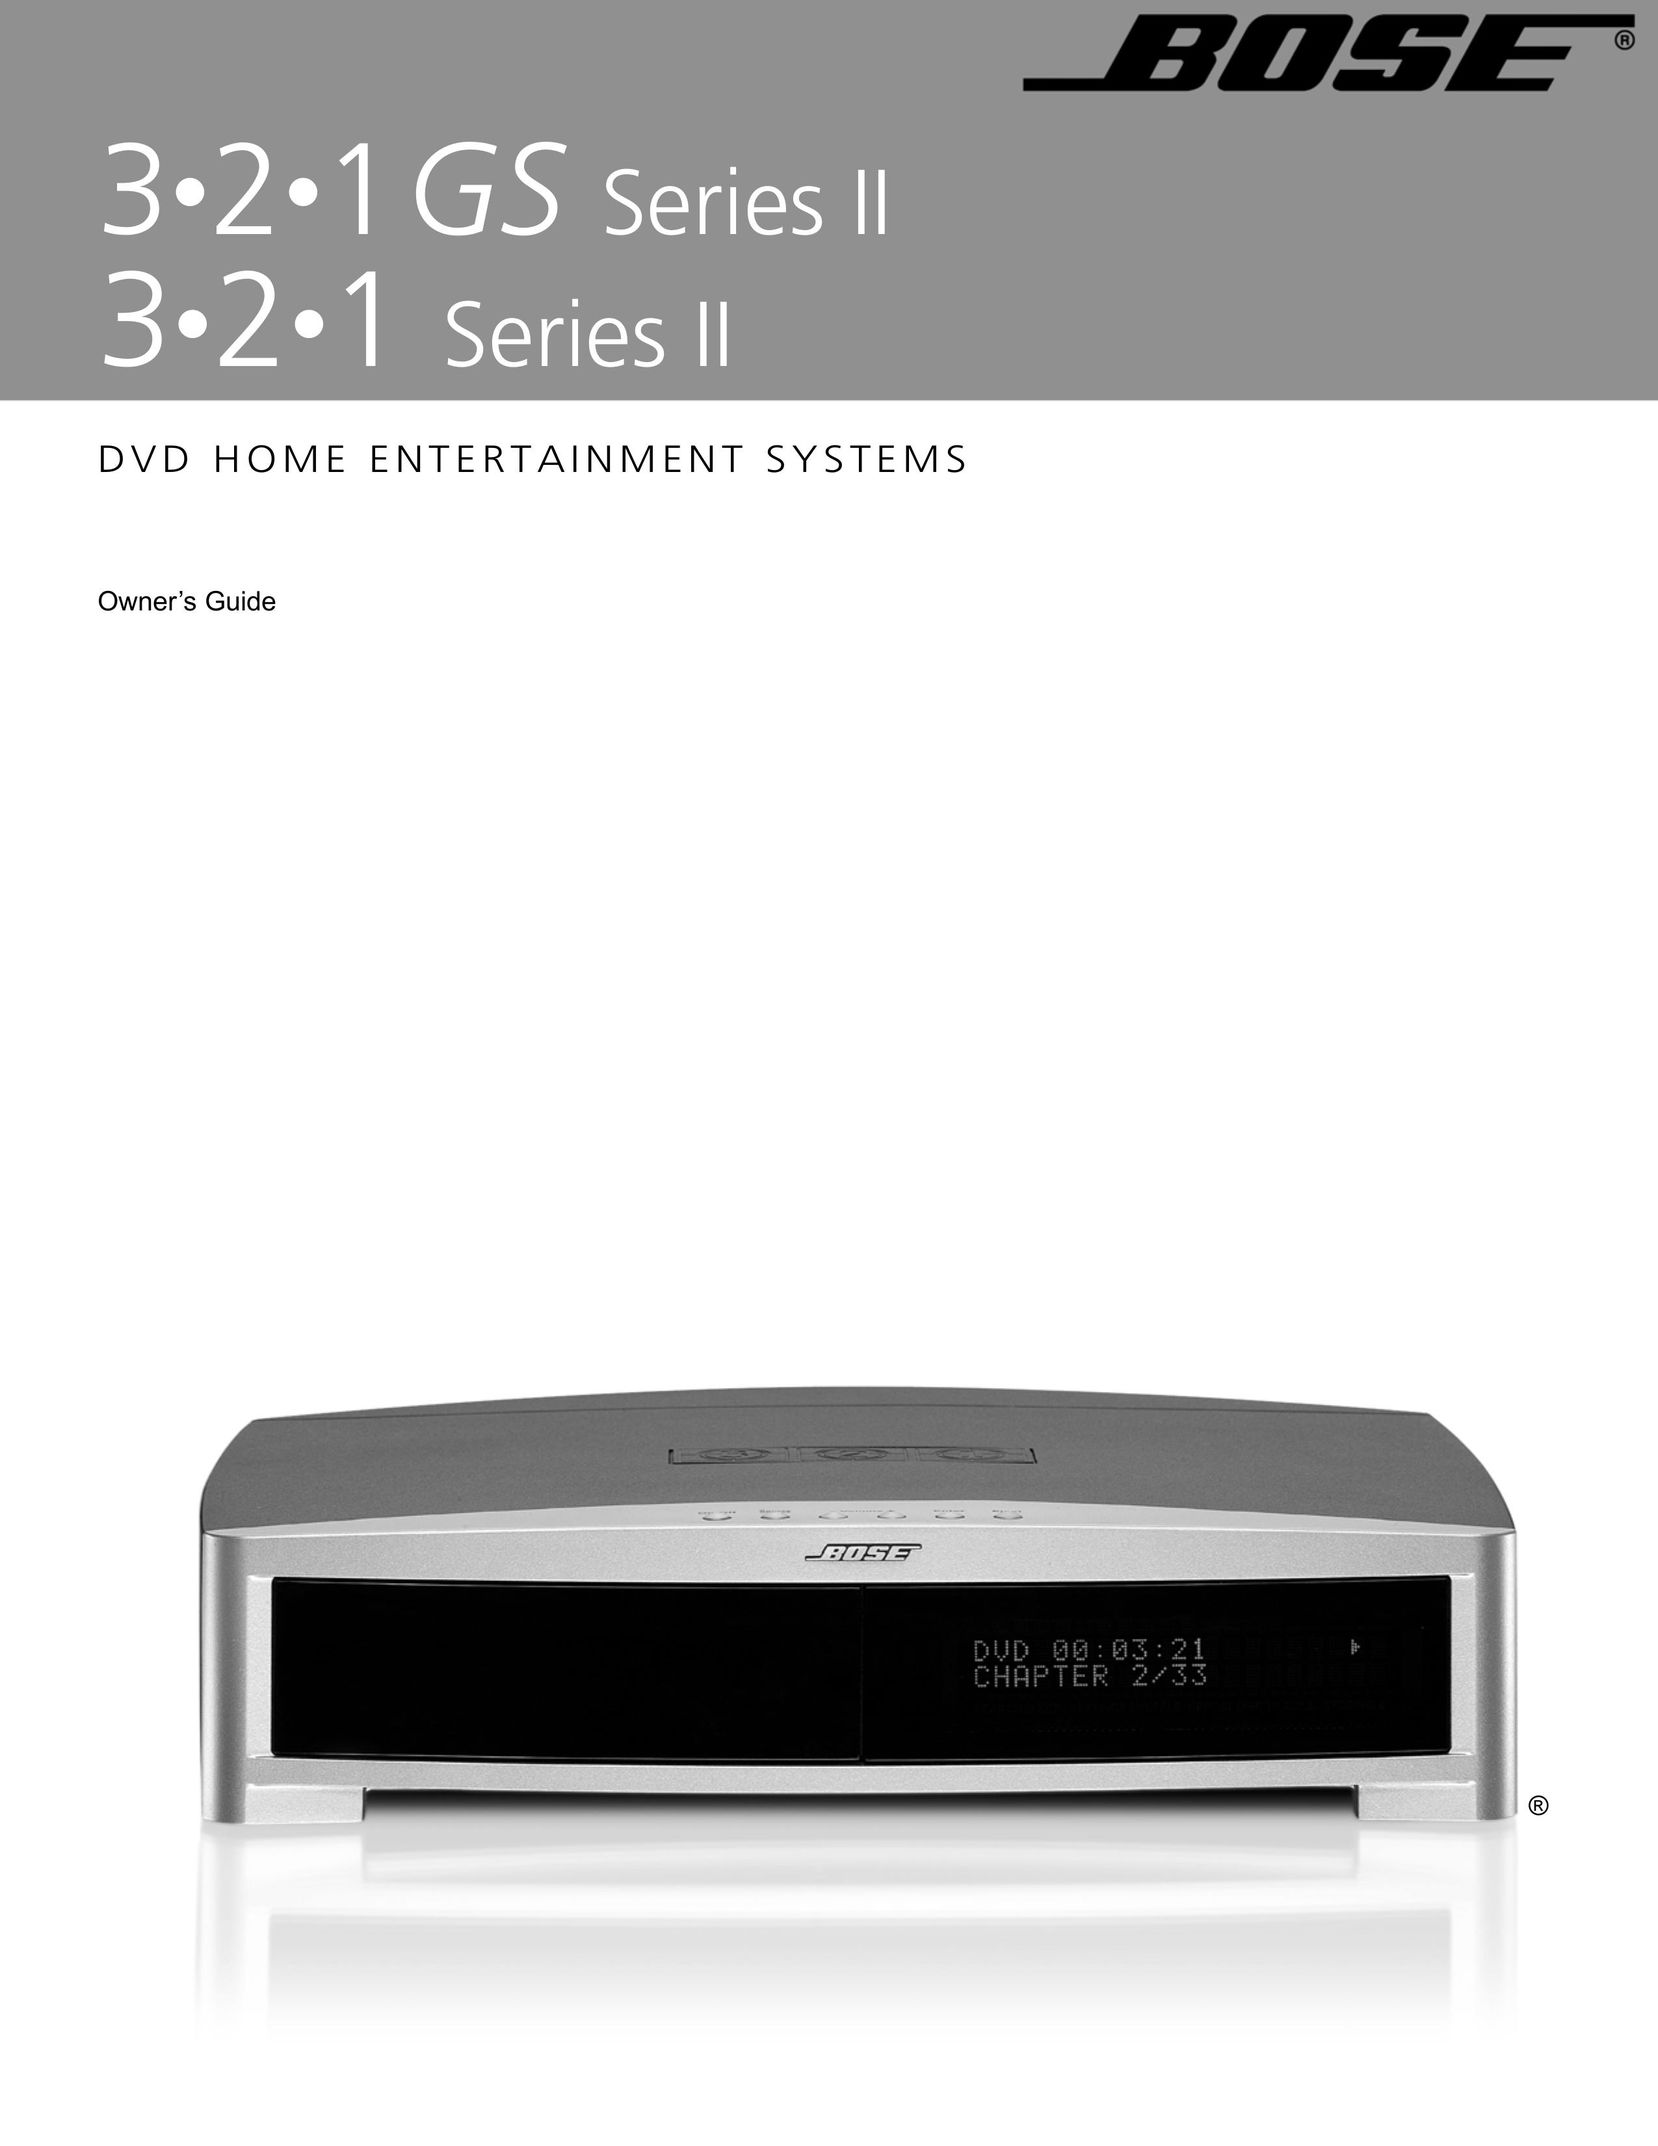 Bose 321 Series II DVD Player User Manual